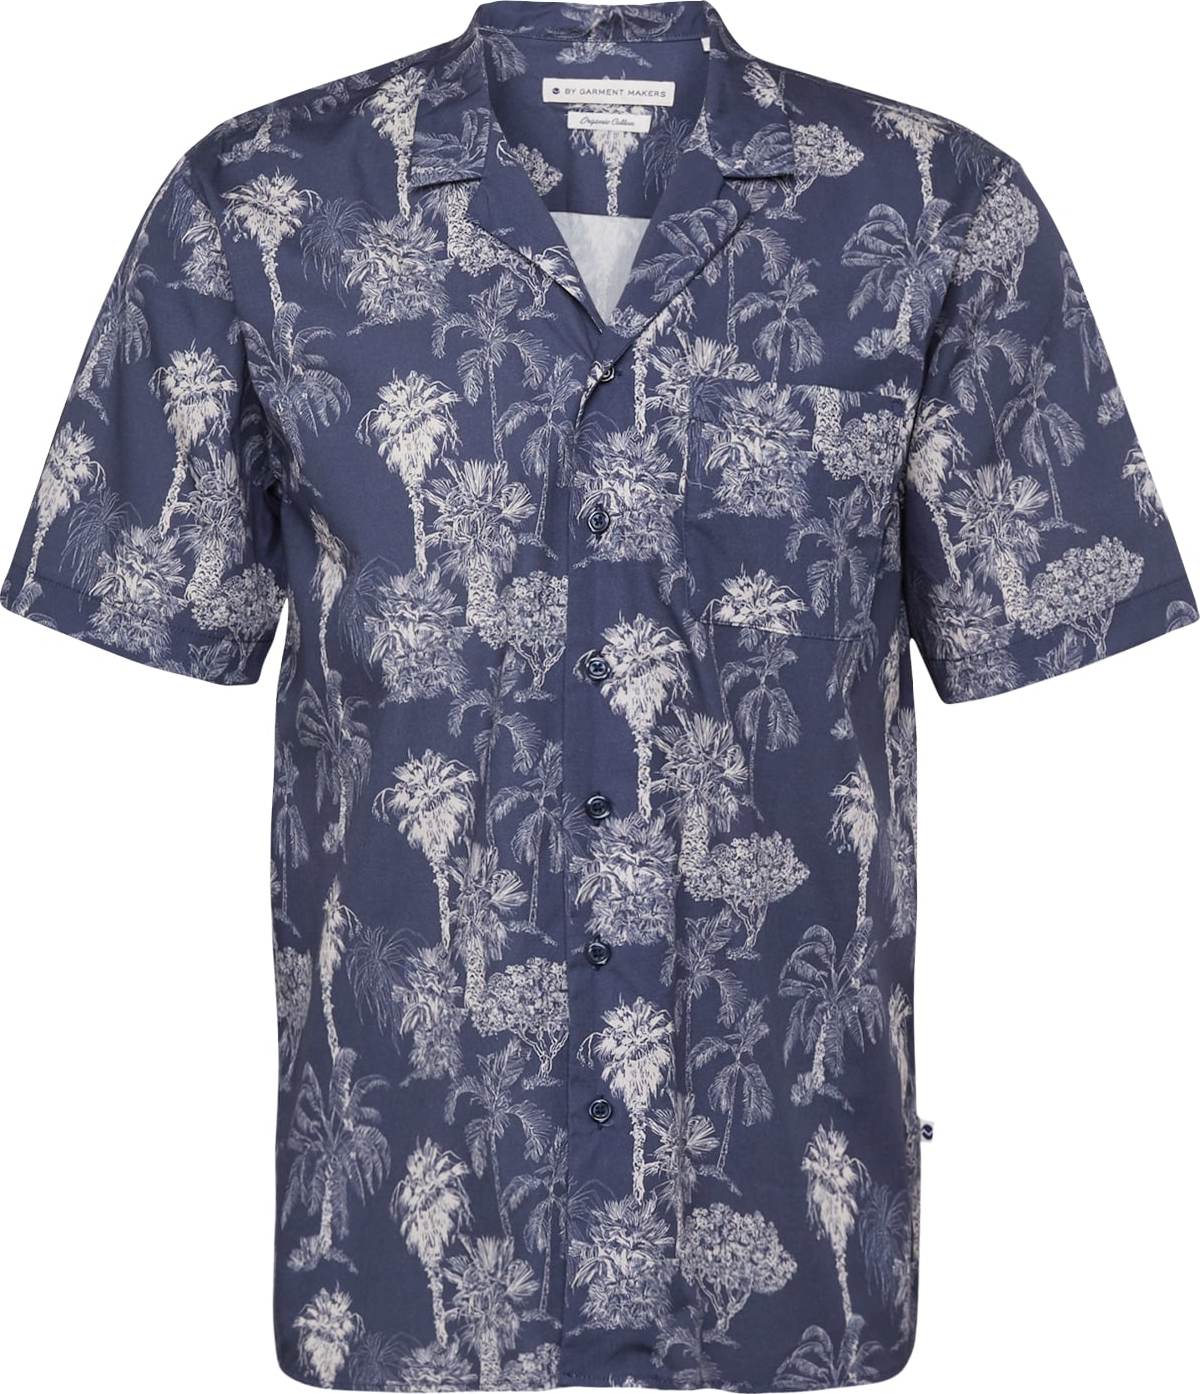 By Garment Makers Košile 'Elmer' námořnická modř / bílá